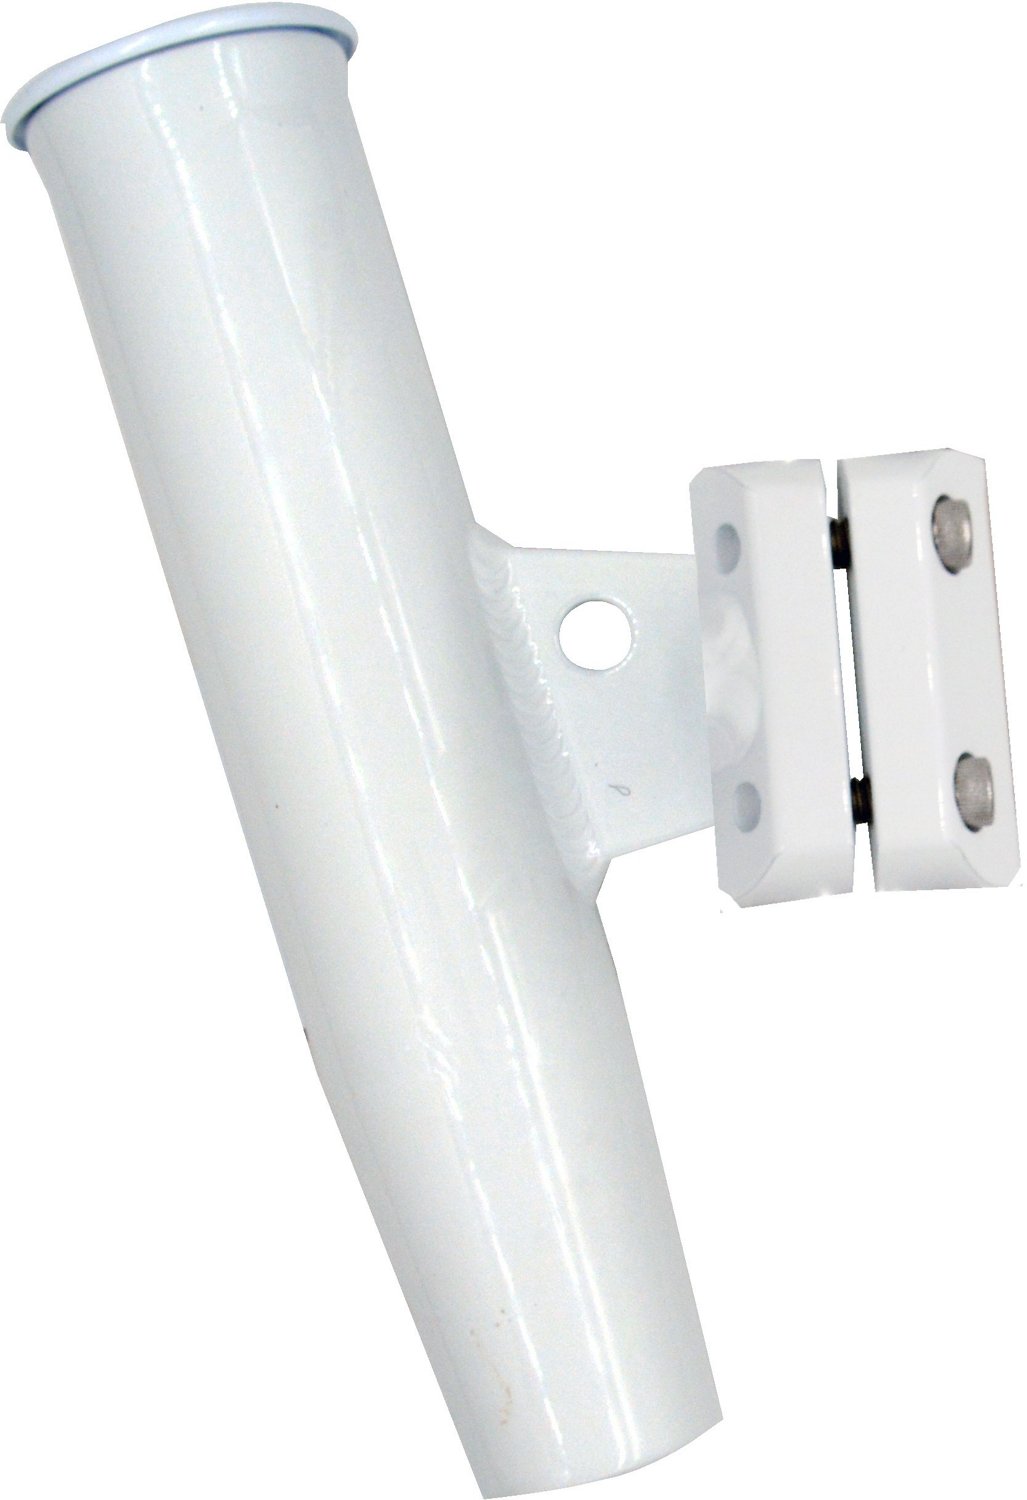 C.E. Smith Company 53726 Adjustable Aluminum Clamp-On Vertical Rod Holder